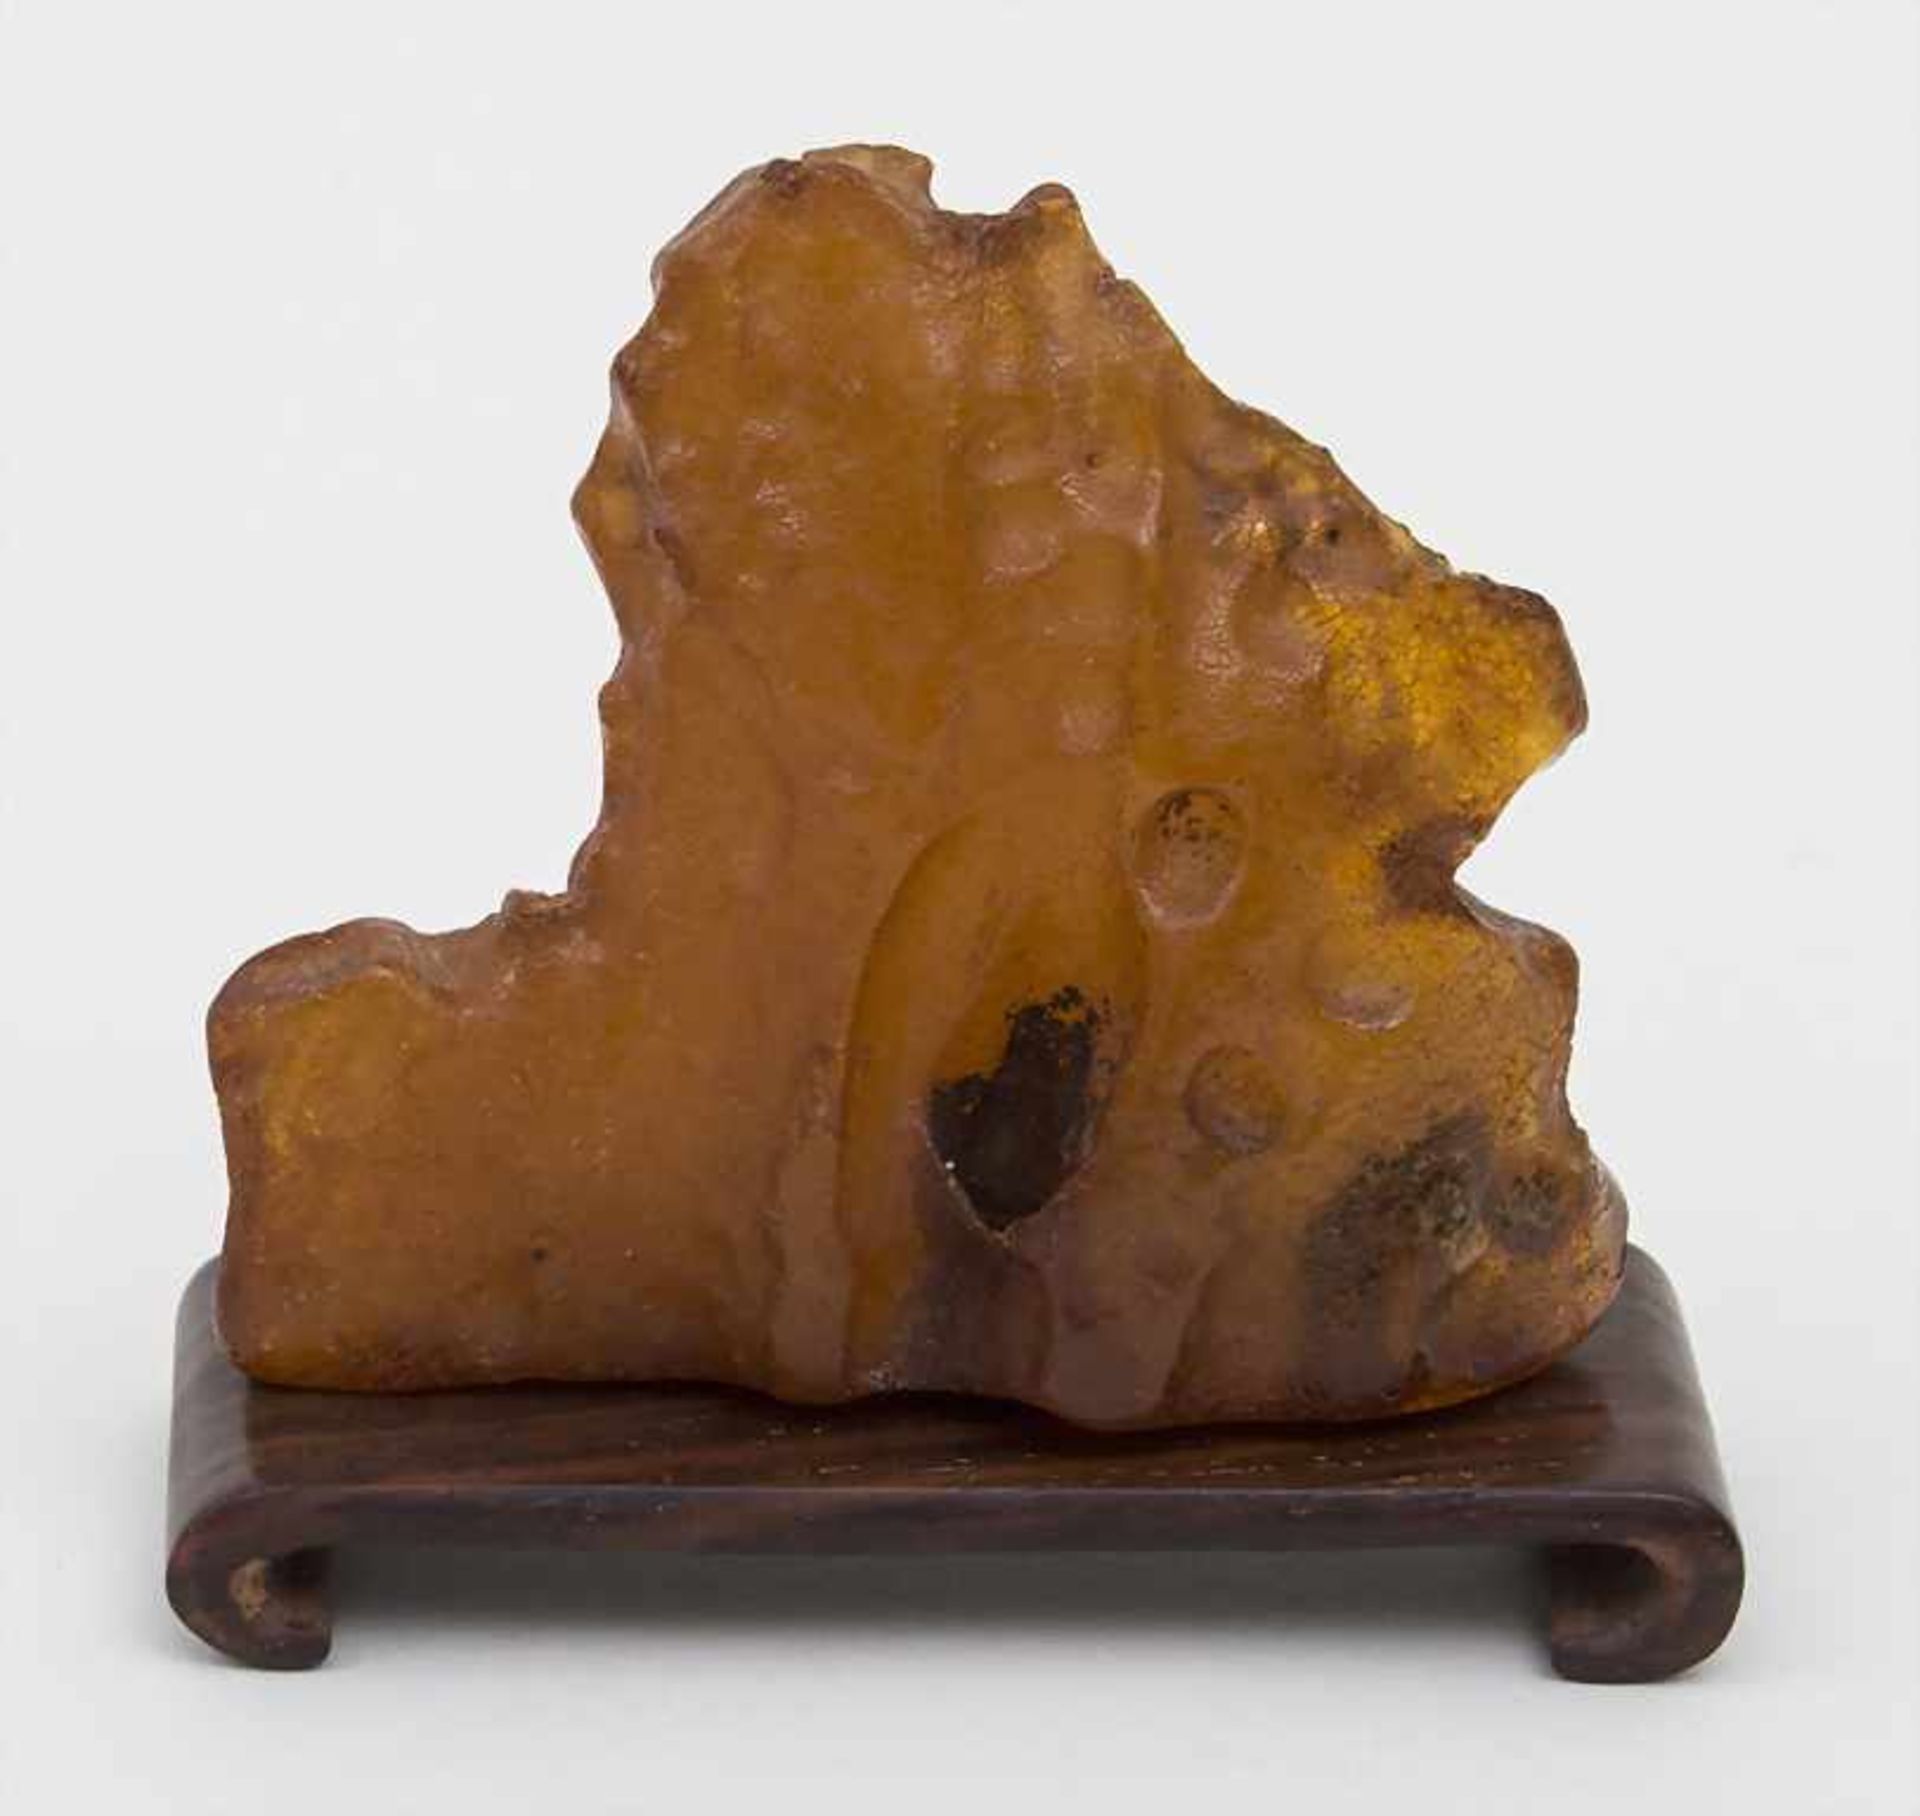 Bernstein in Felsenform / Amber in the form of a rock, China, 19./20. Jh. Material: natürlicher